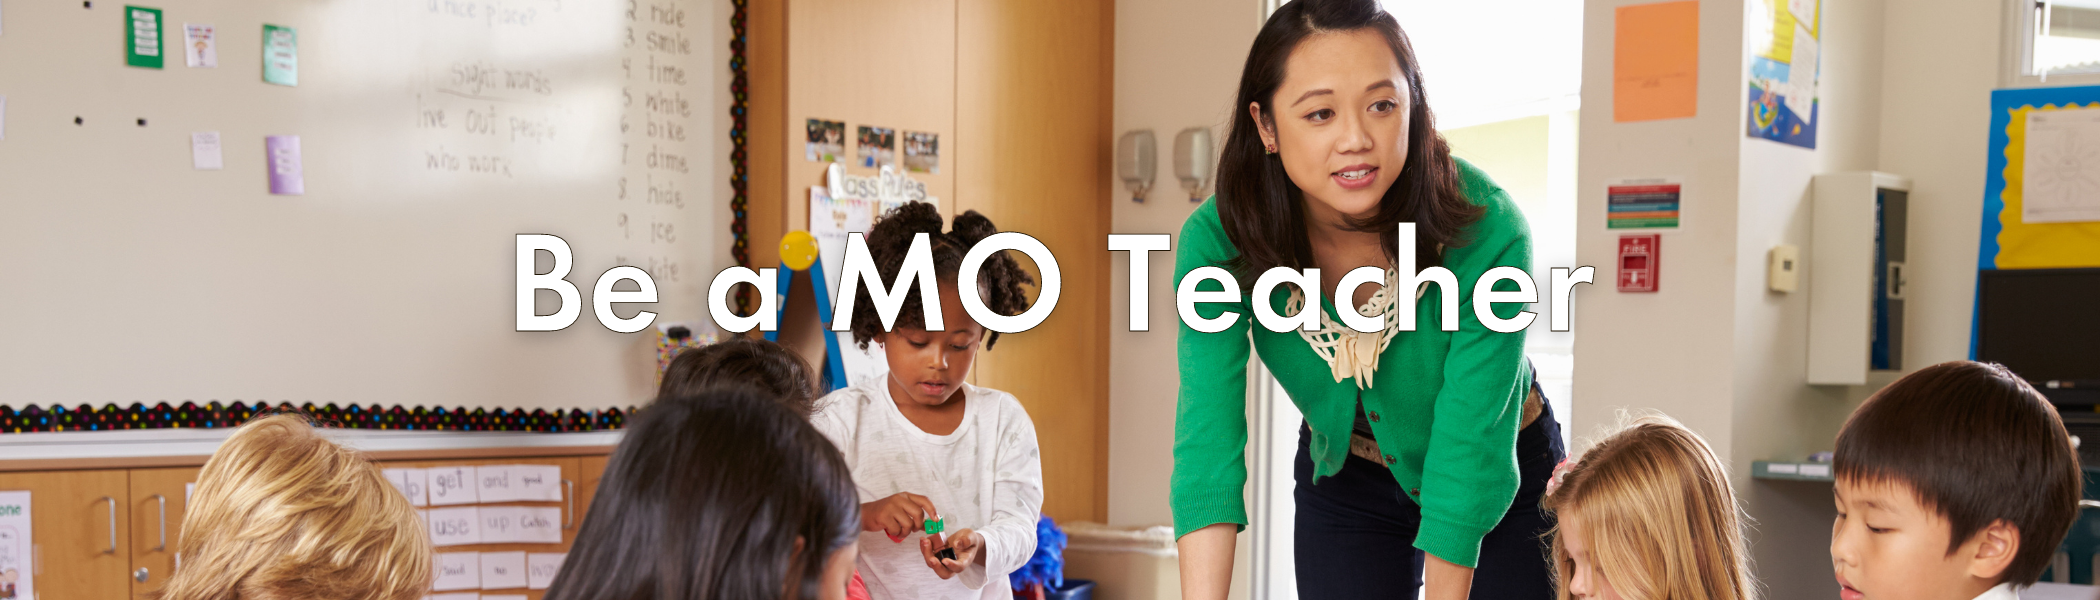 Be a MO Teacher